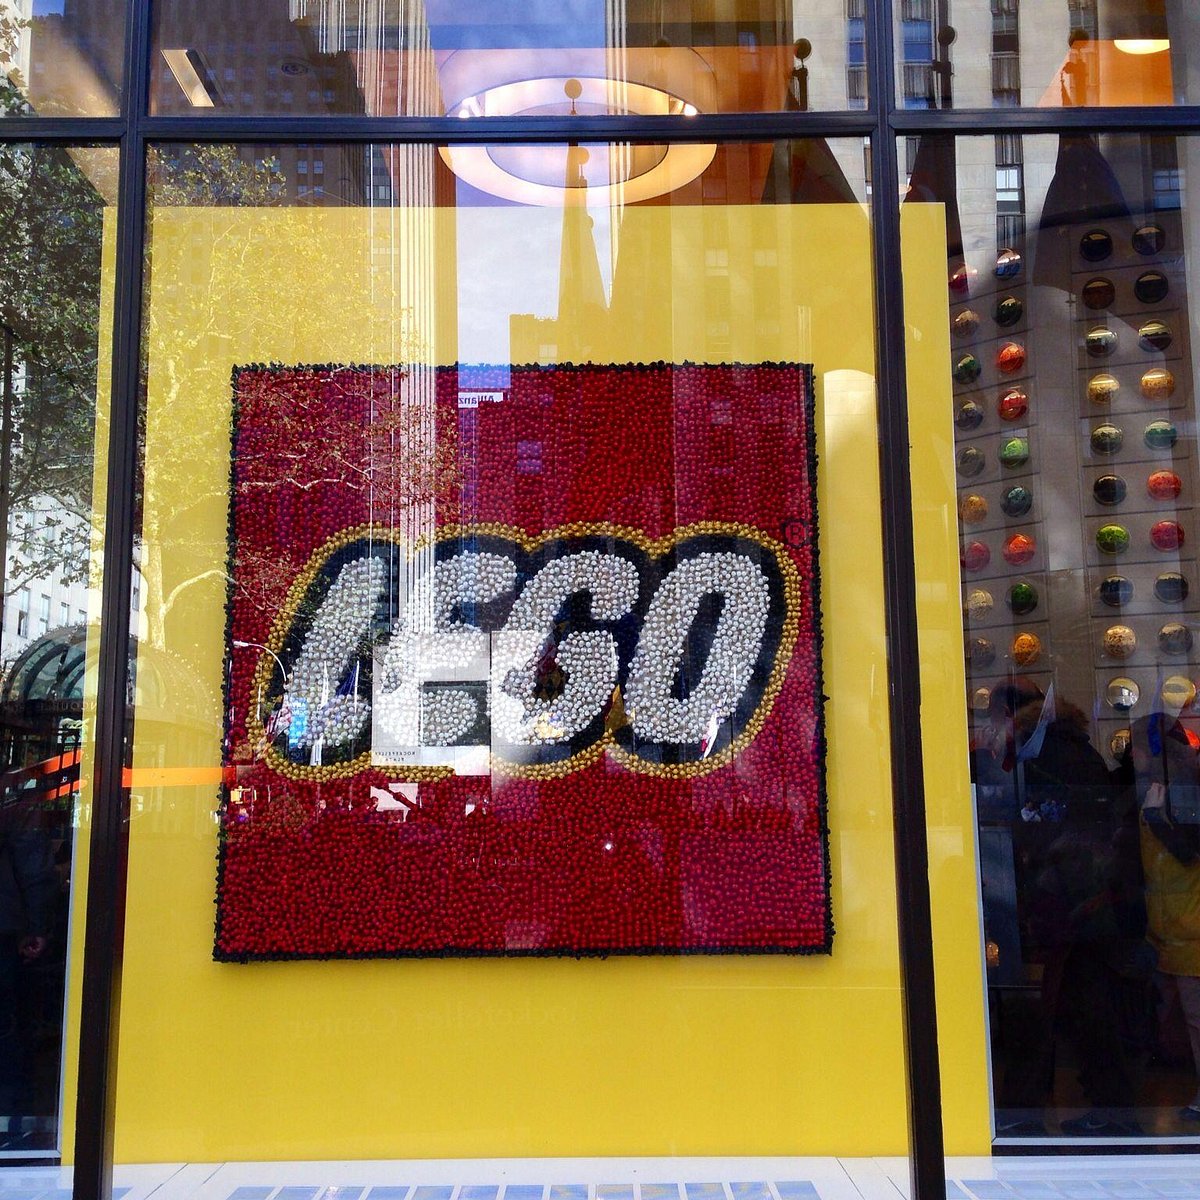 Lego Store Manila